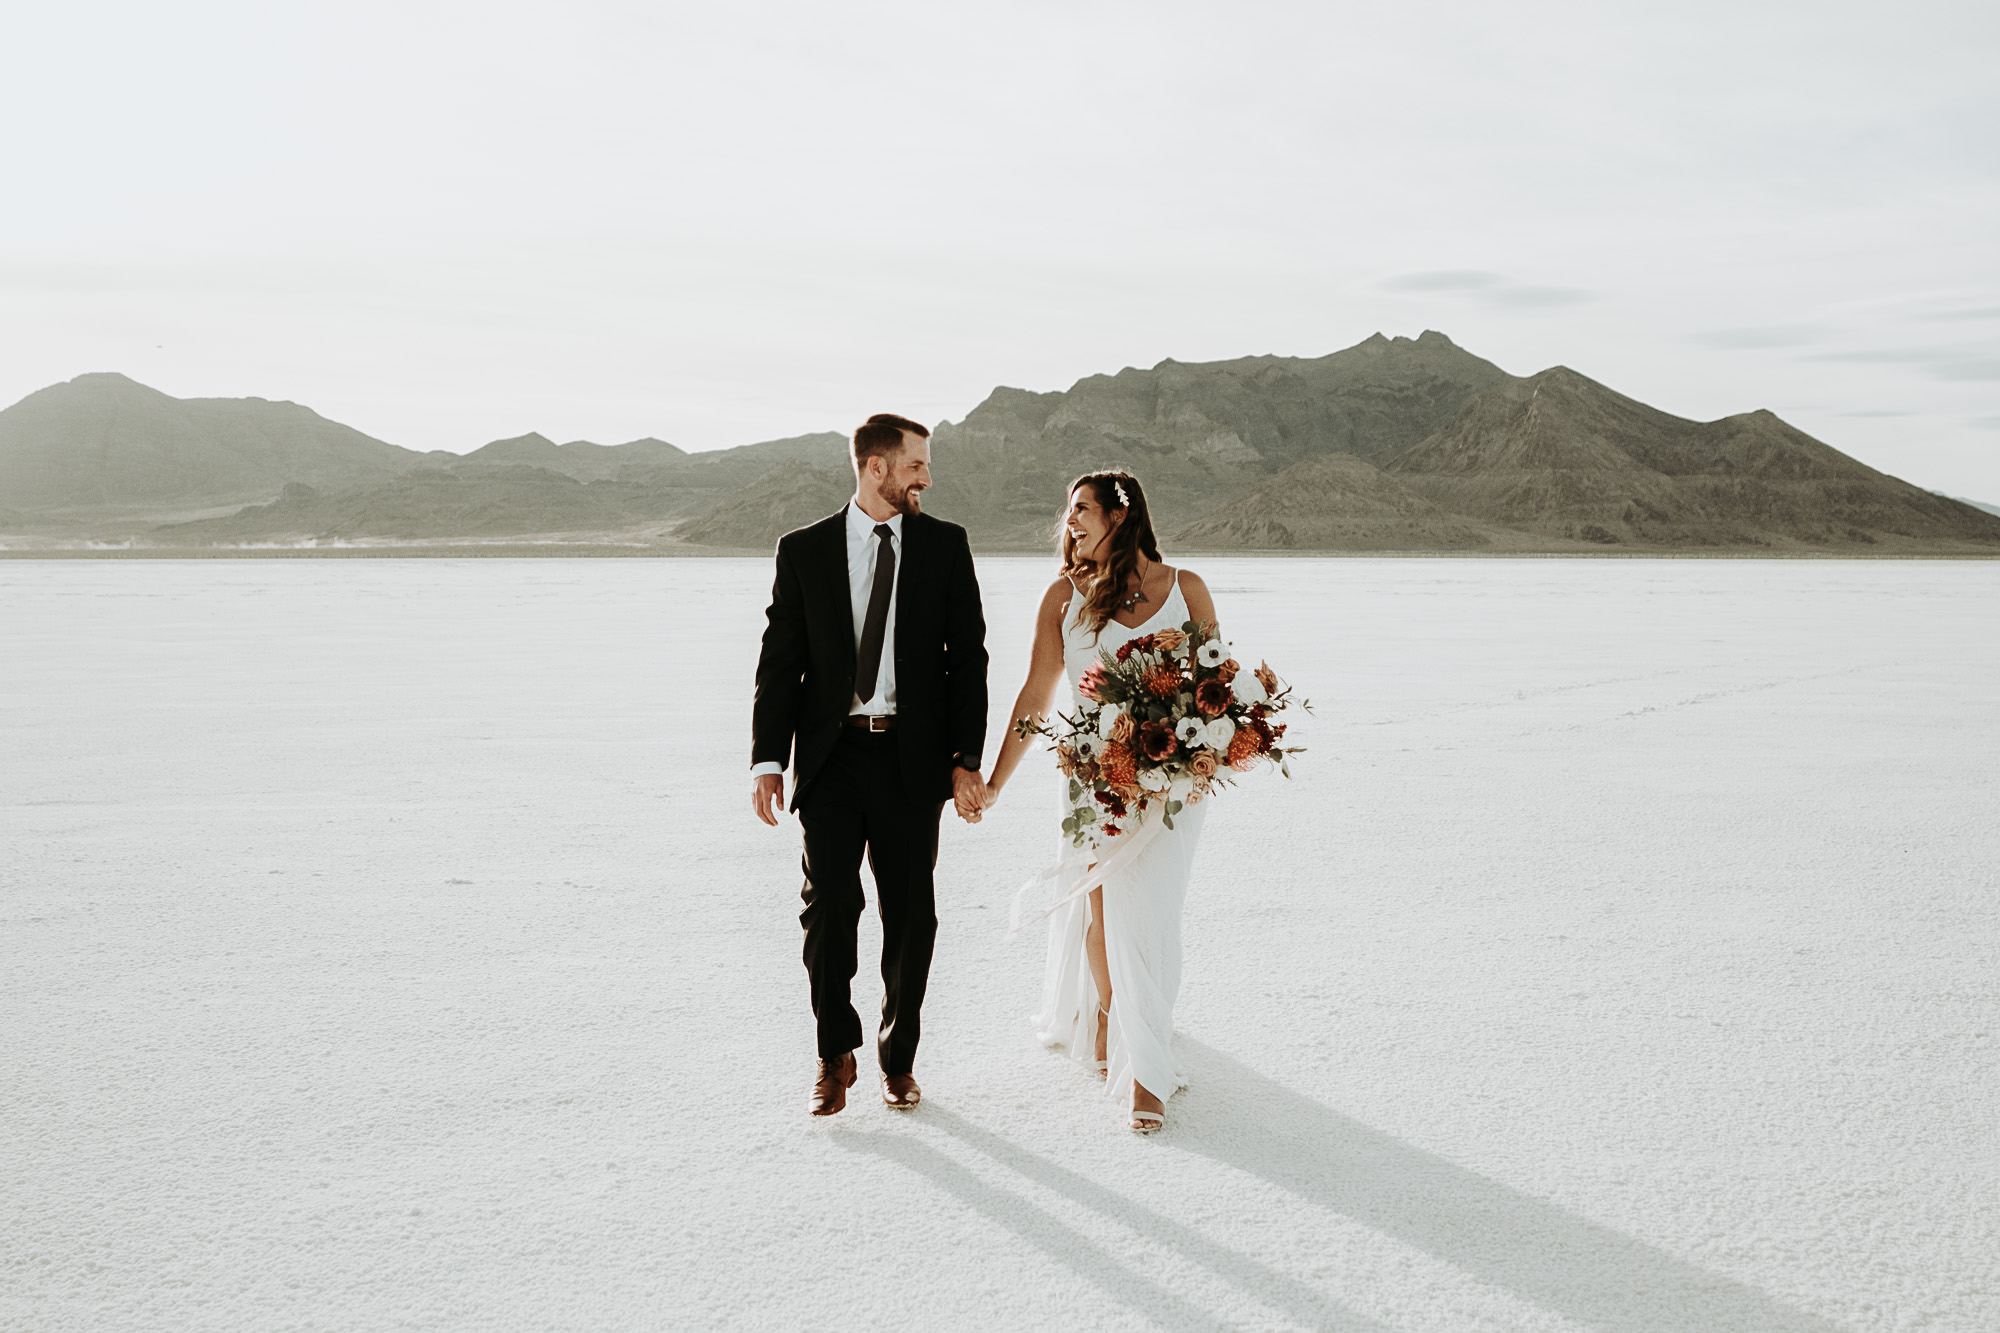 Bonneville Salt Flats bride and groom walking